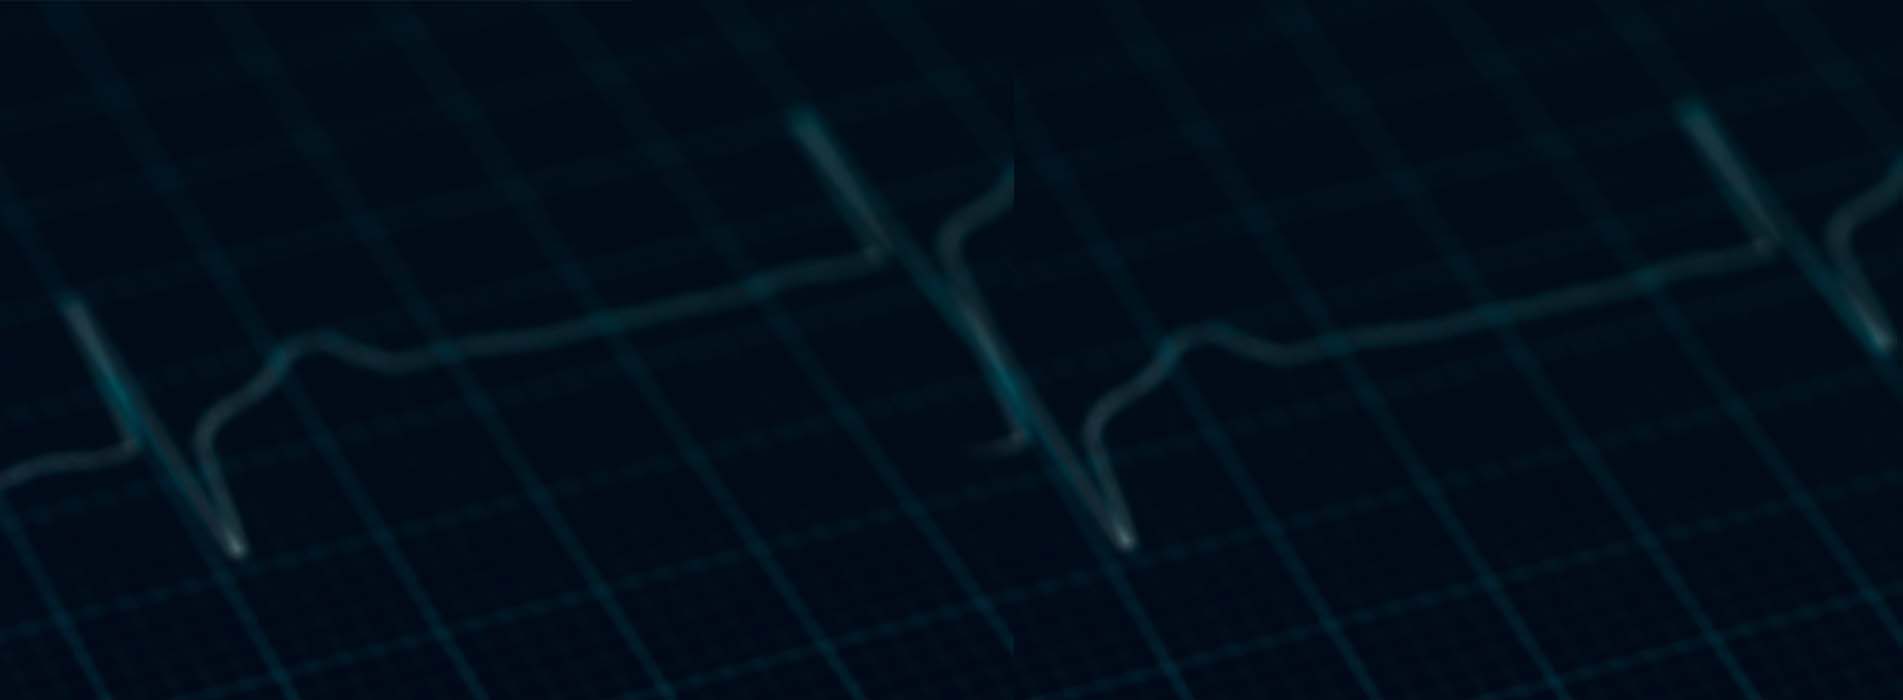 An EKG waveform of a heartbeat pulsating against a dark background